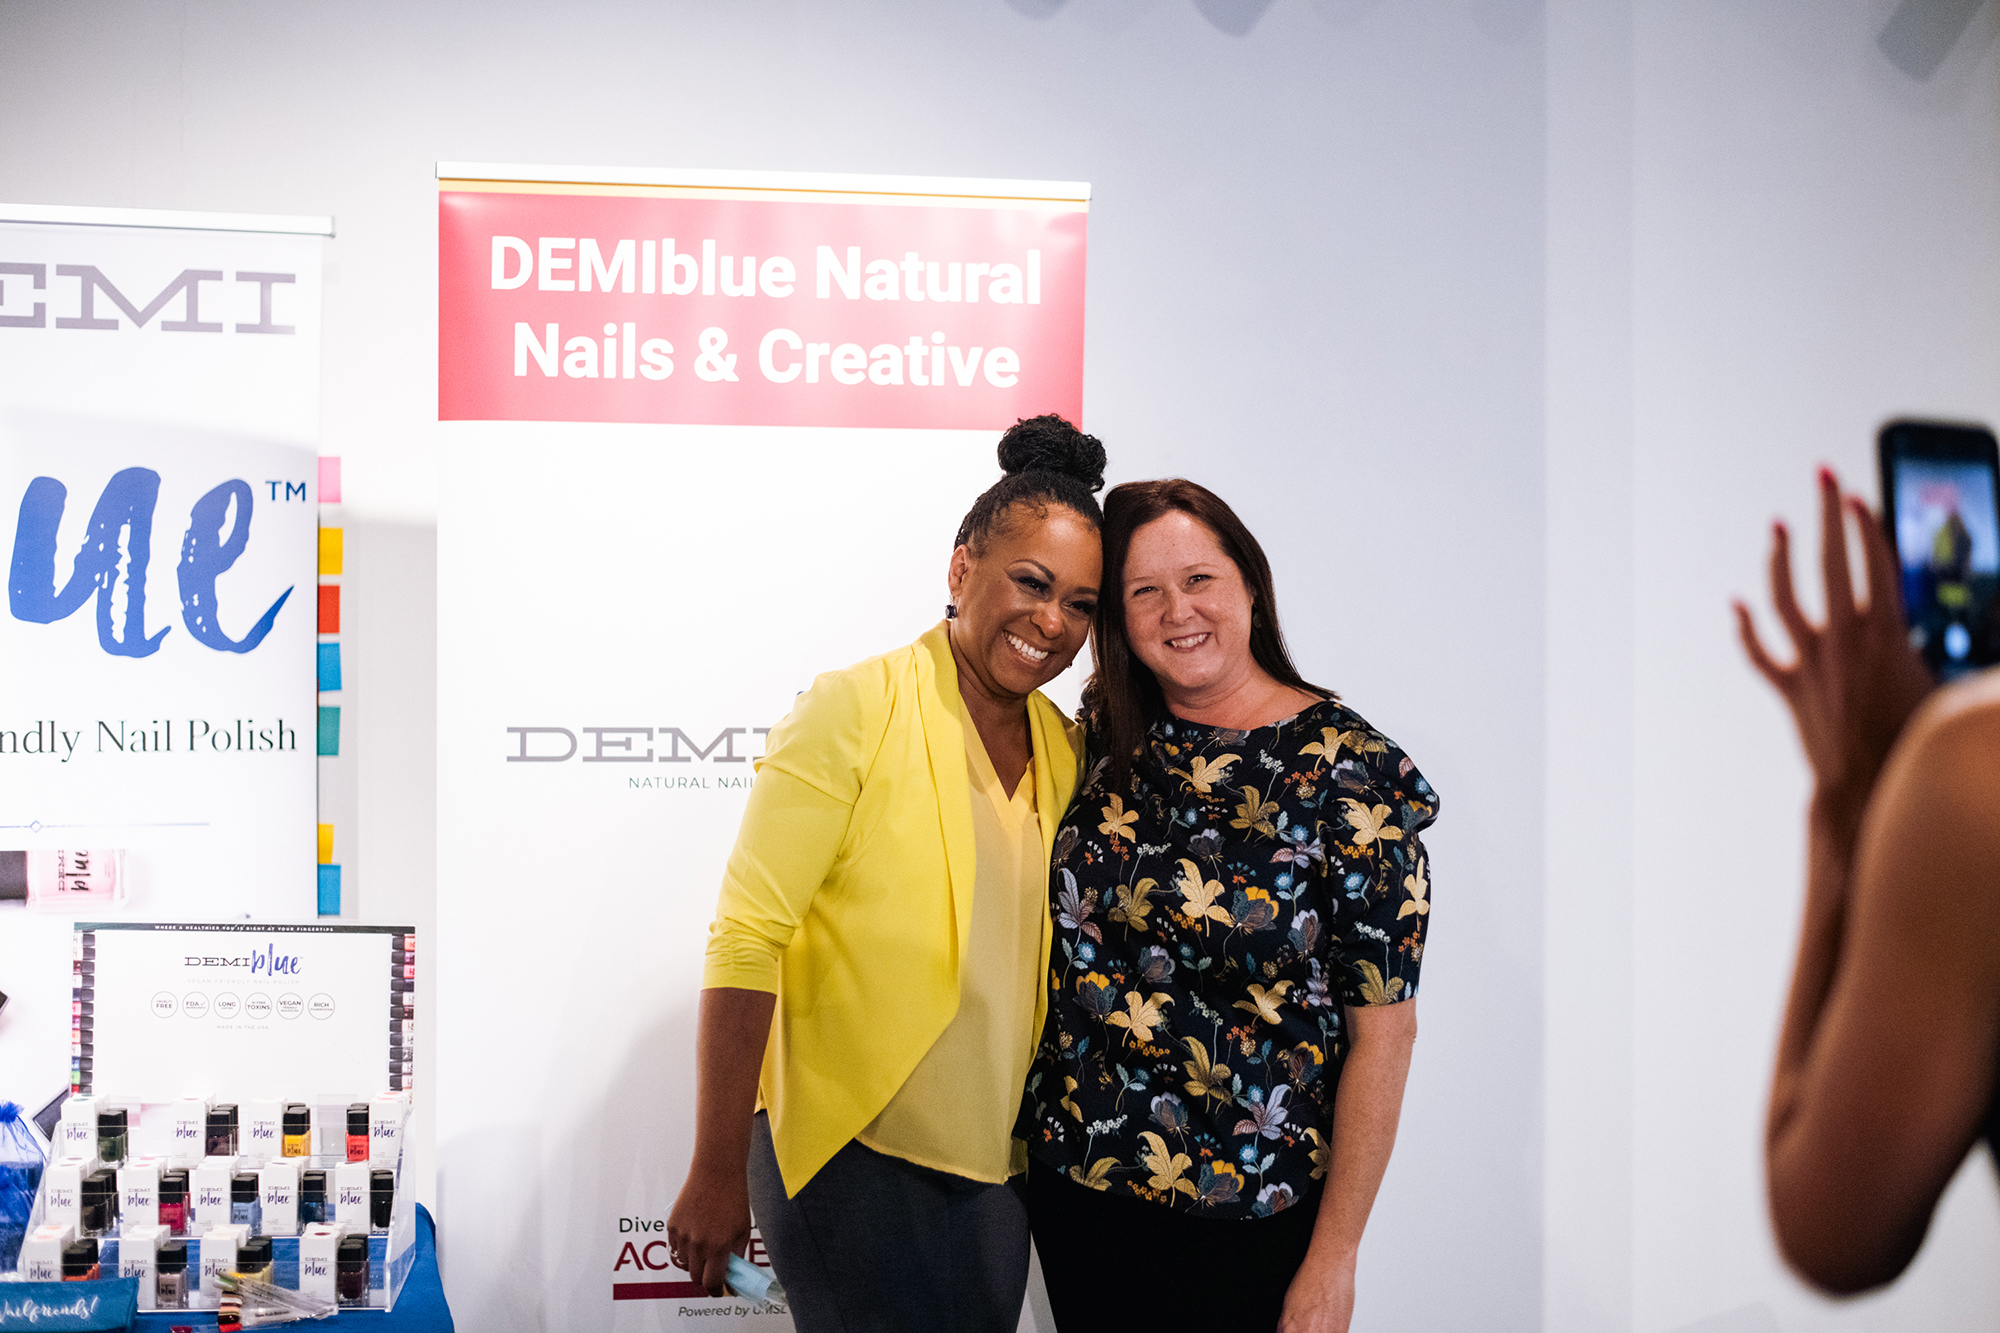 Demi Blue Nails founder